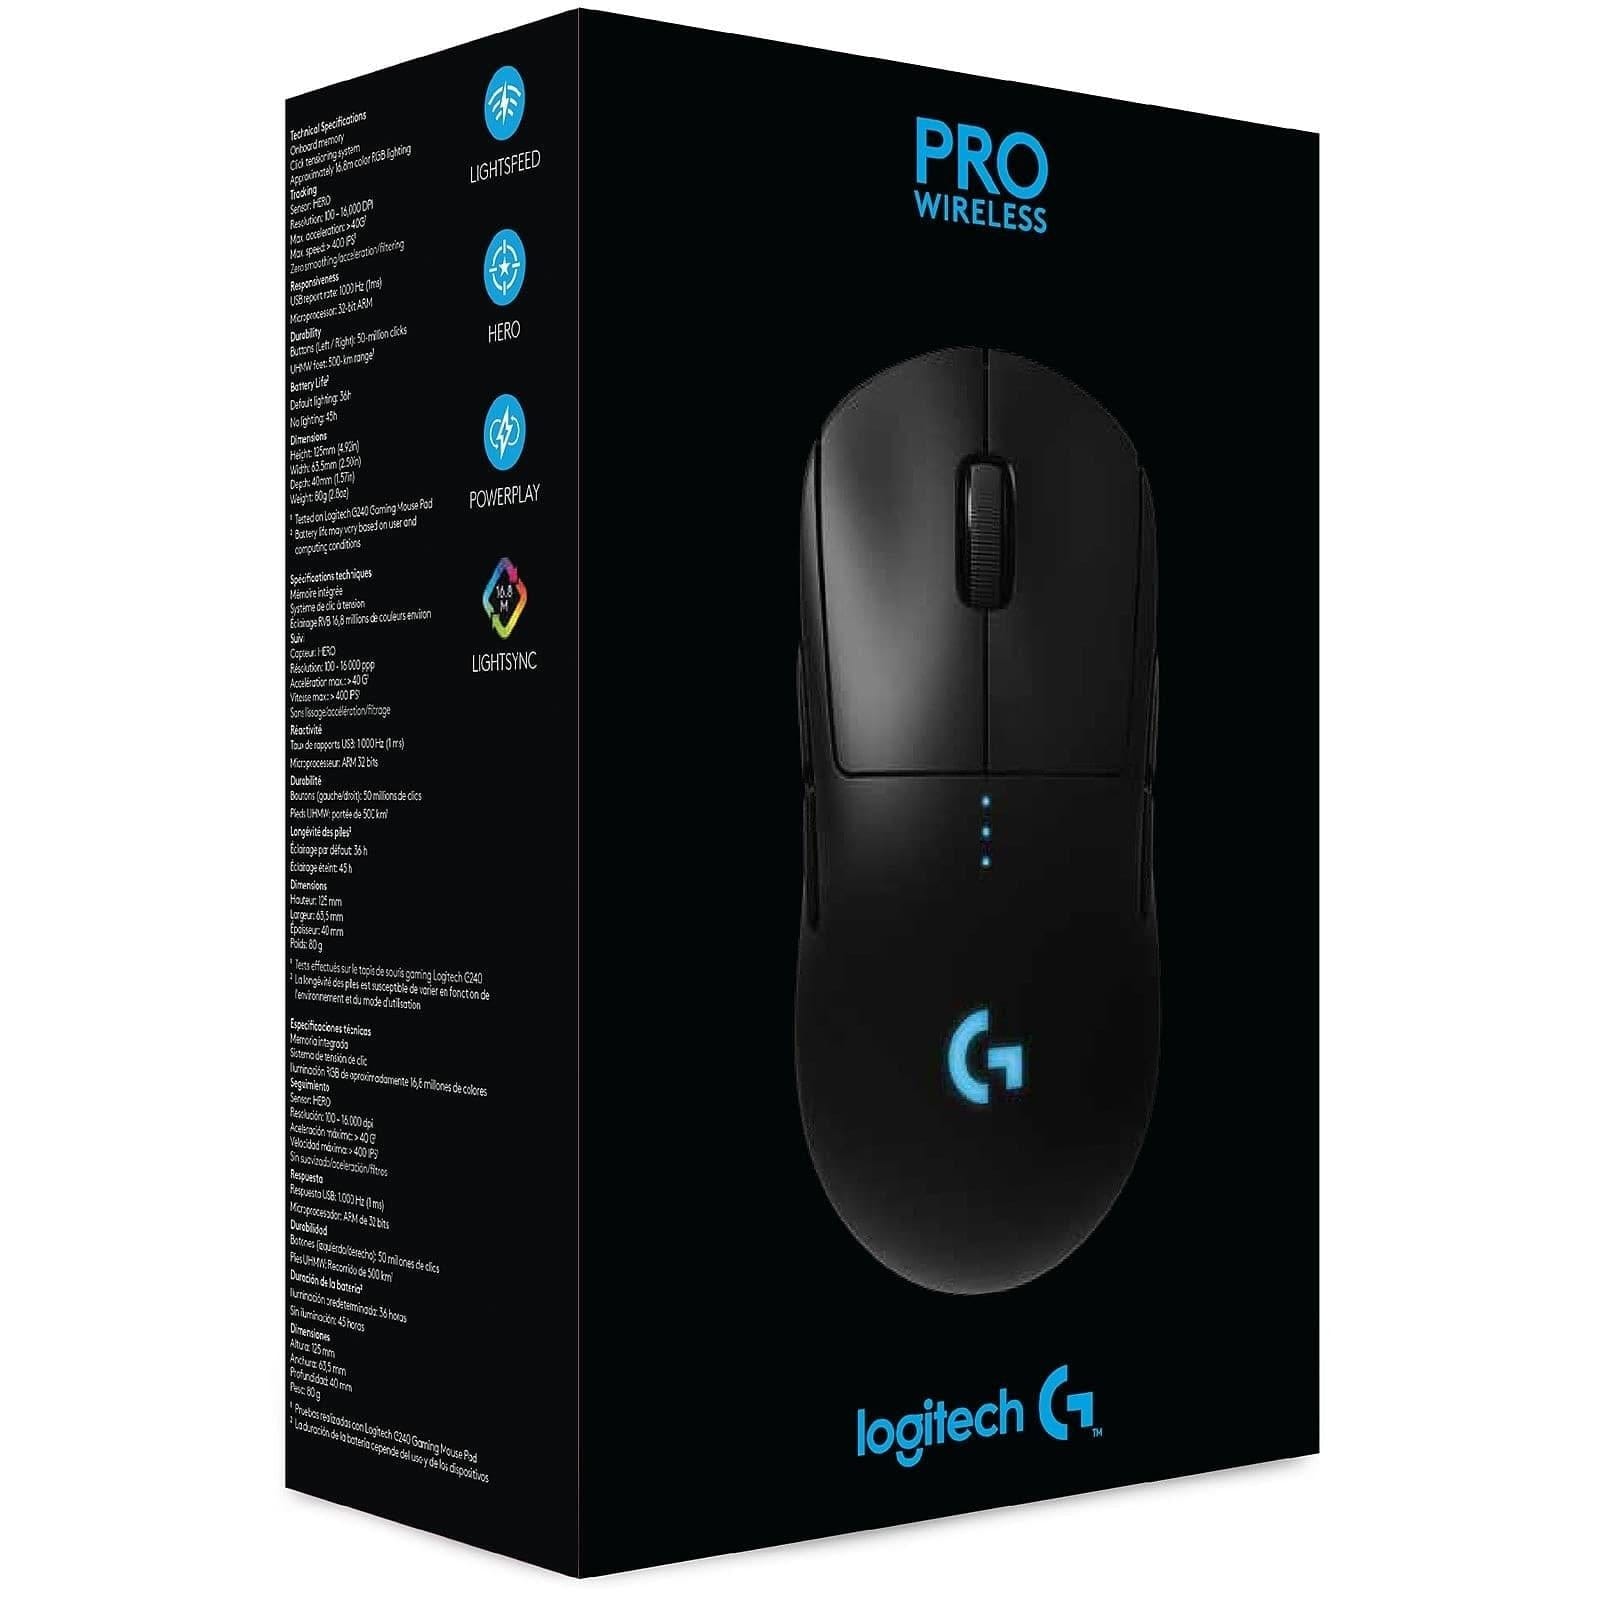 Logitech G Pro Wireless Gaming Mouse - Noir prix maroc- Pc Gamer Maroc - Smartmarket.ma